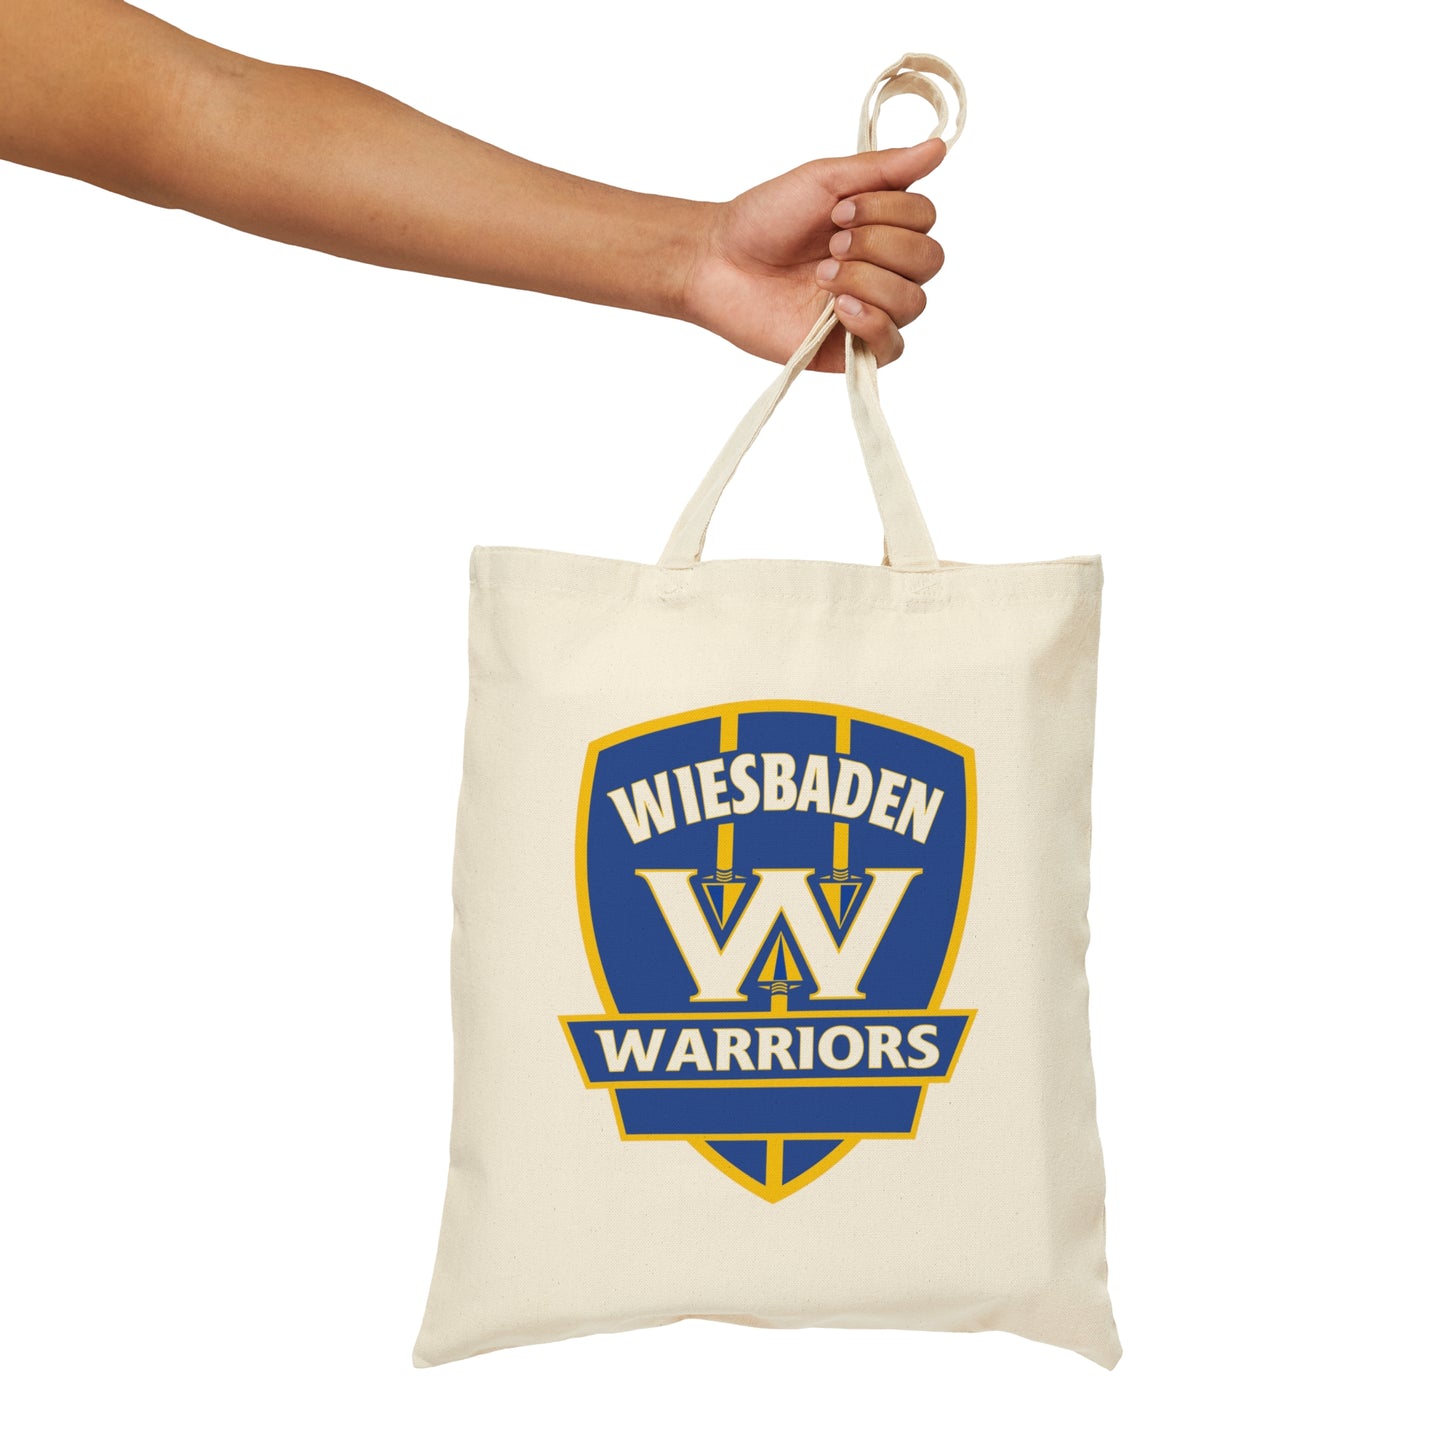 Wiesbaden Warriors - Cotton Canvas Tote Bag